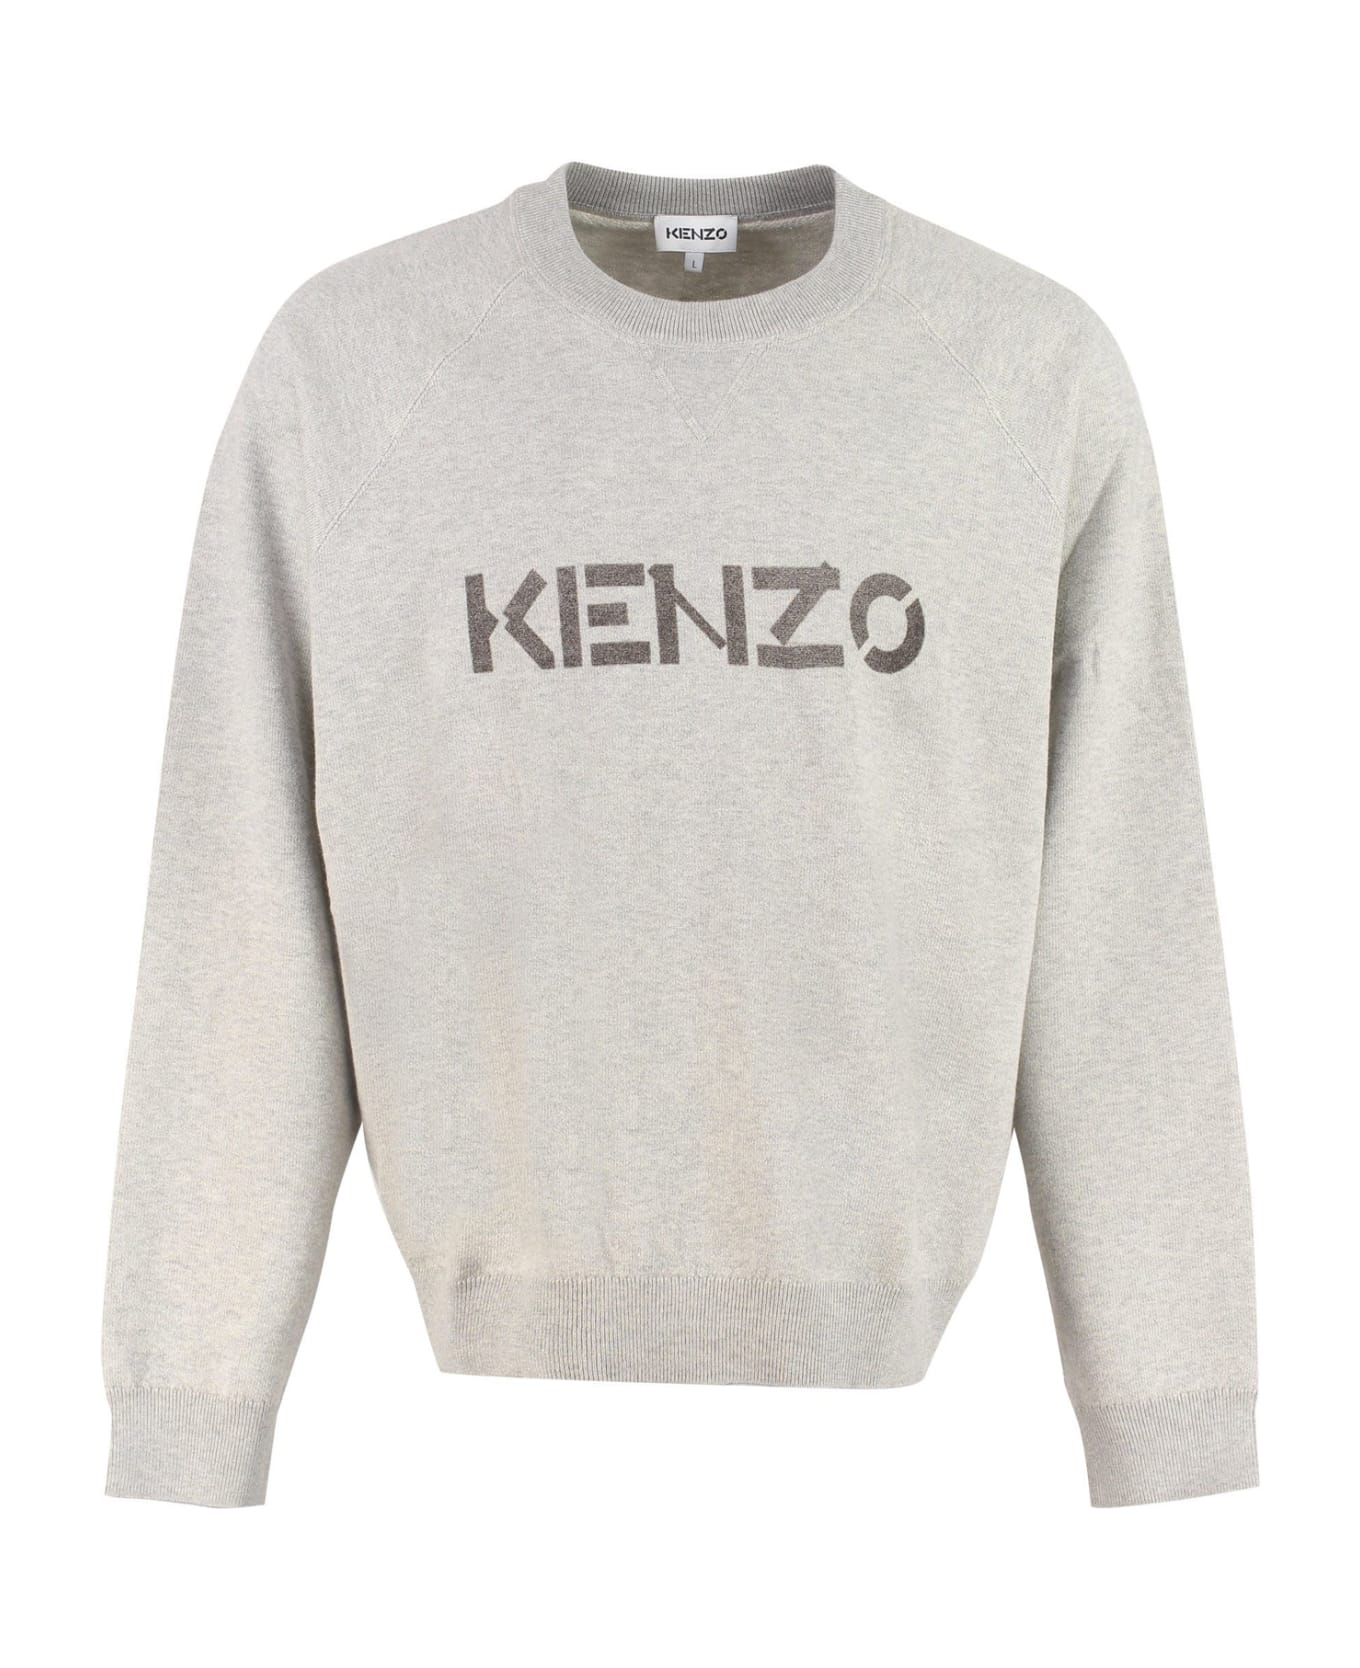 Kenzo Wool Sweater - Gray